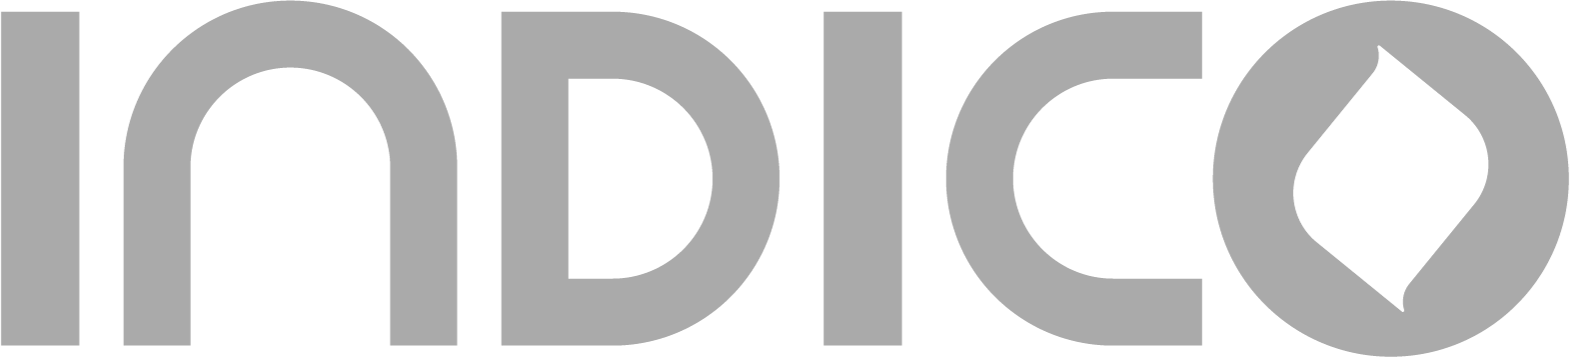 logo-indico-gray.png